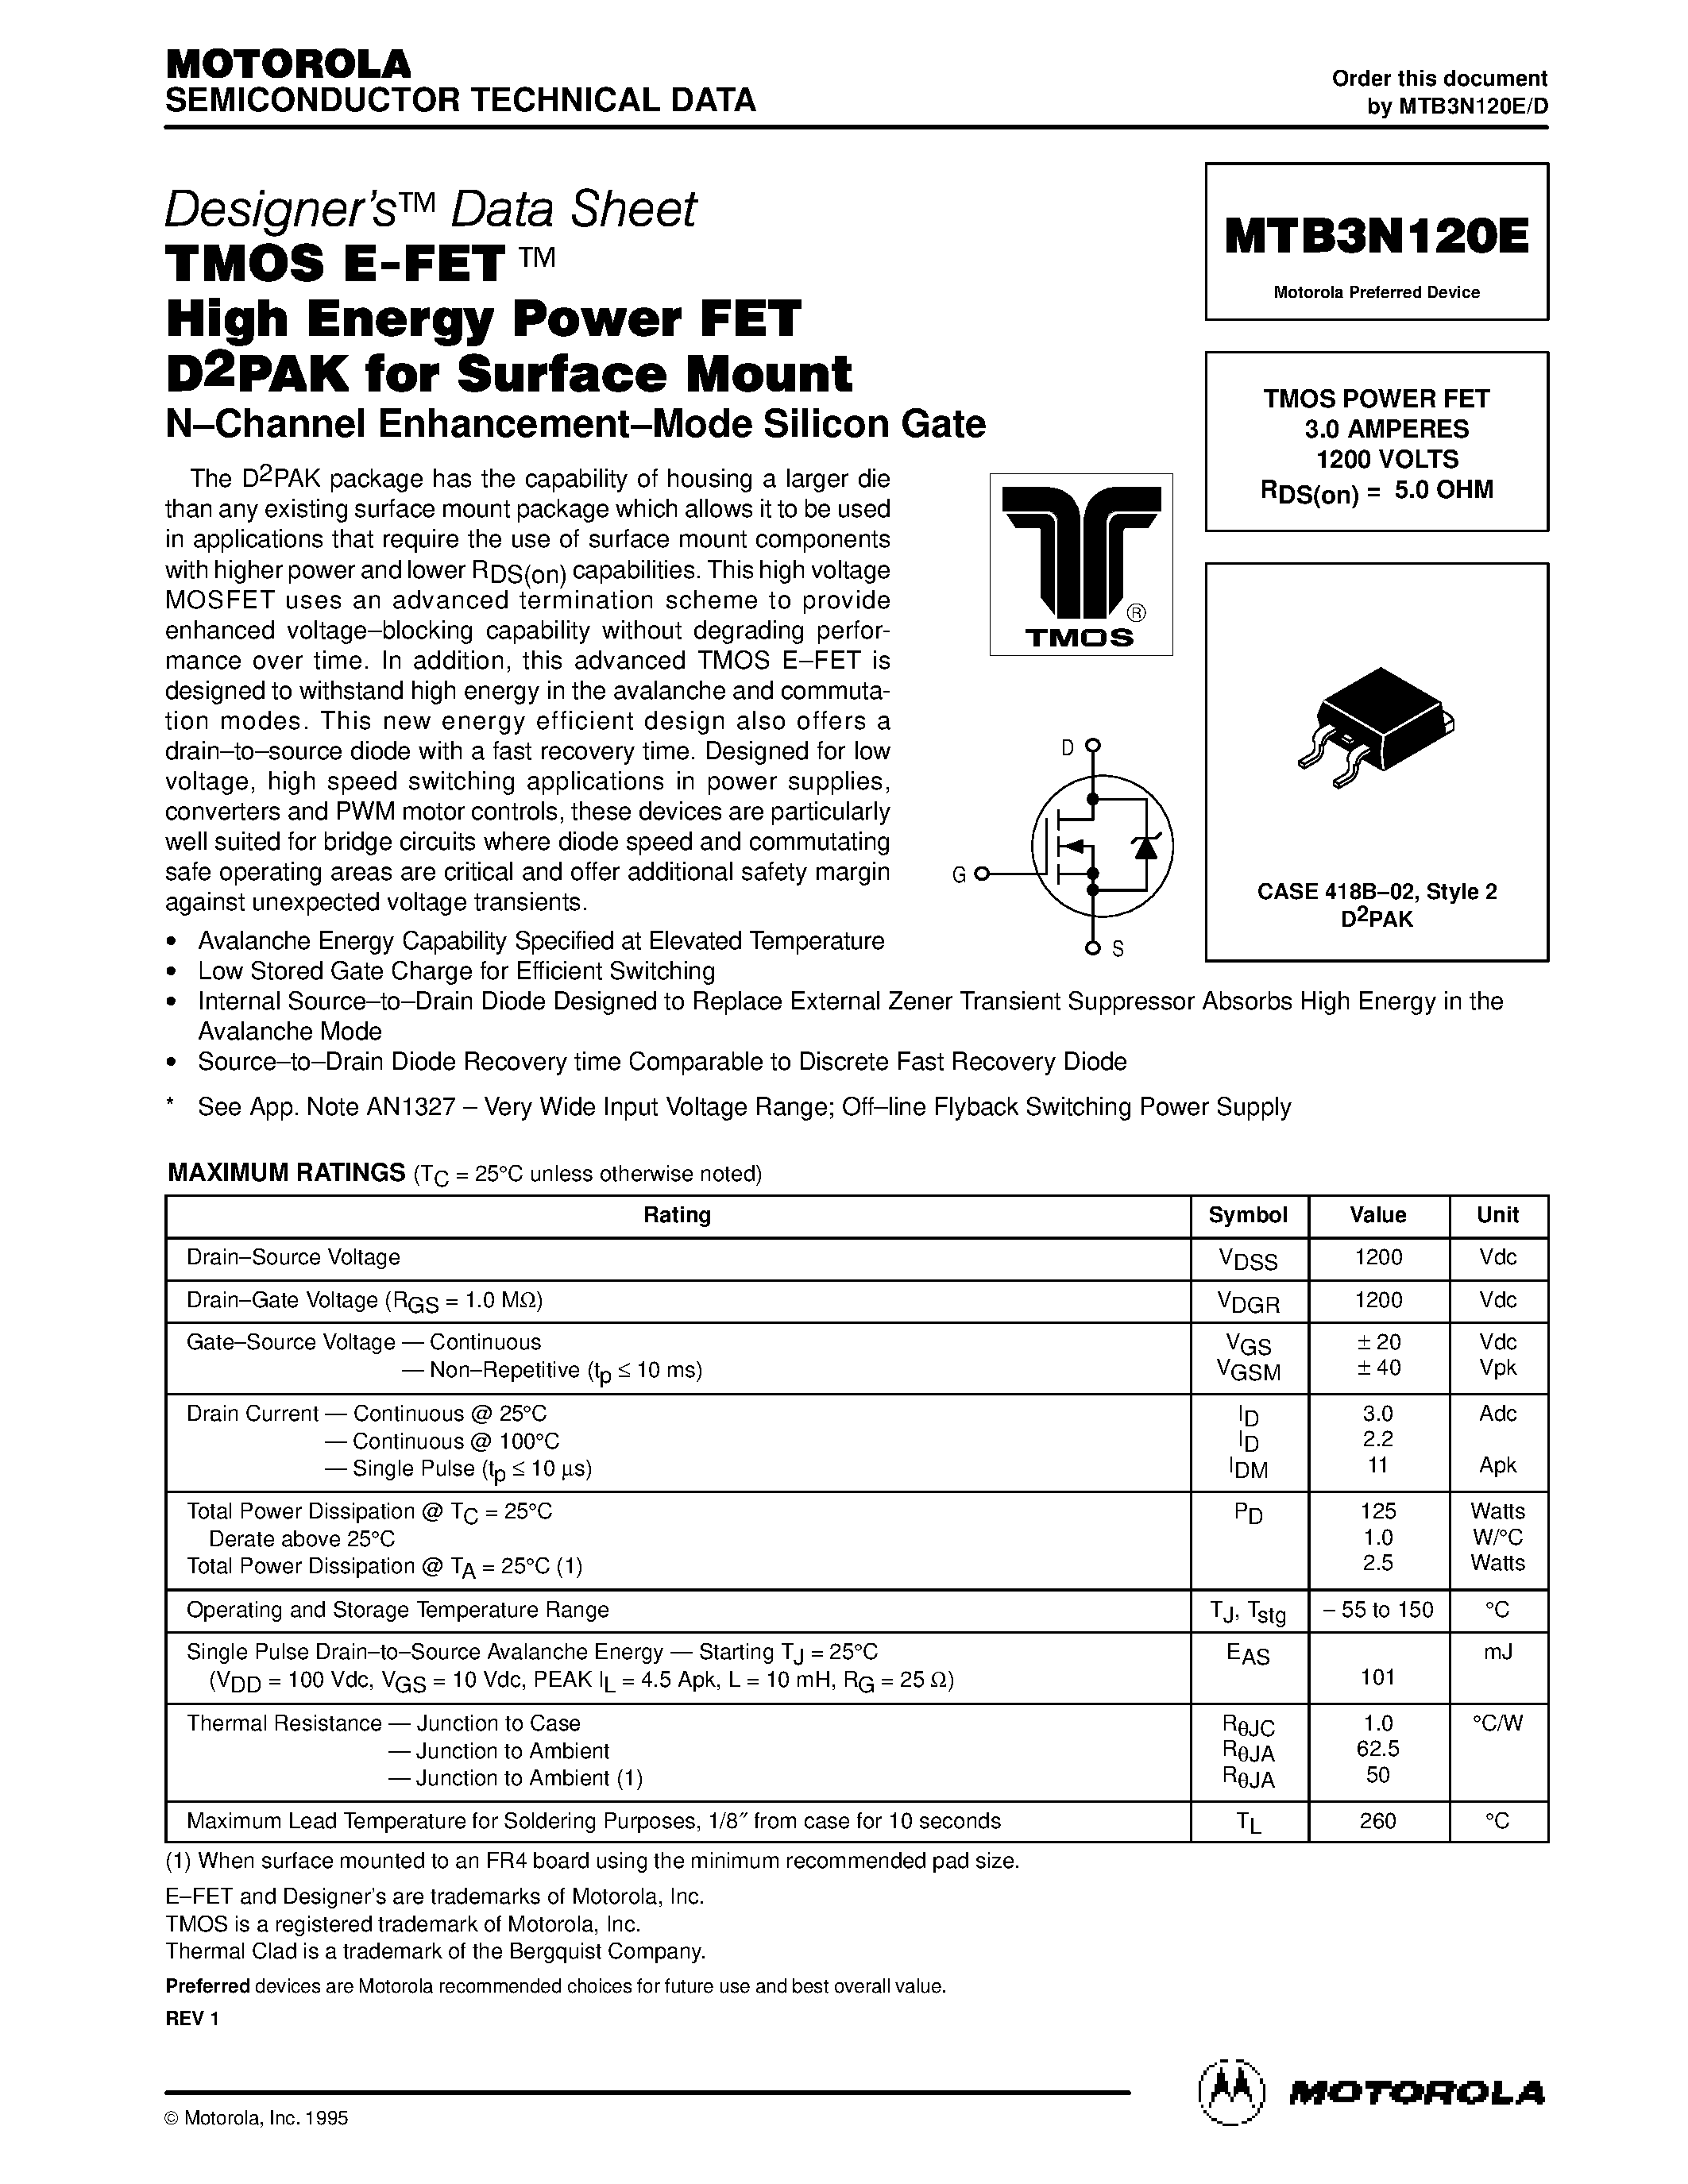 Даташит MTB3N120E - TMOS POWER FET 3.0 AMPERES 1200 VOLTS страница 1